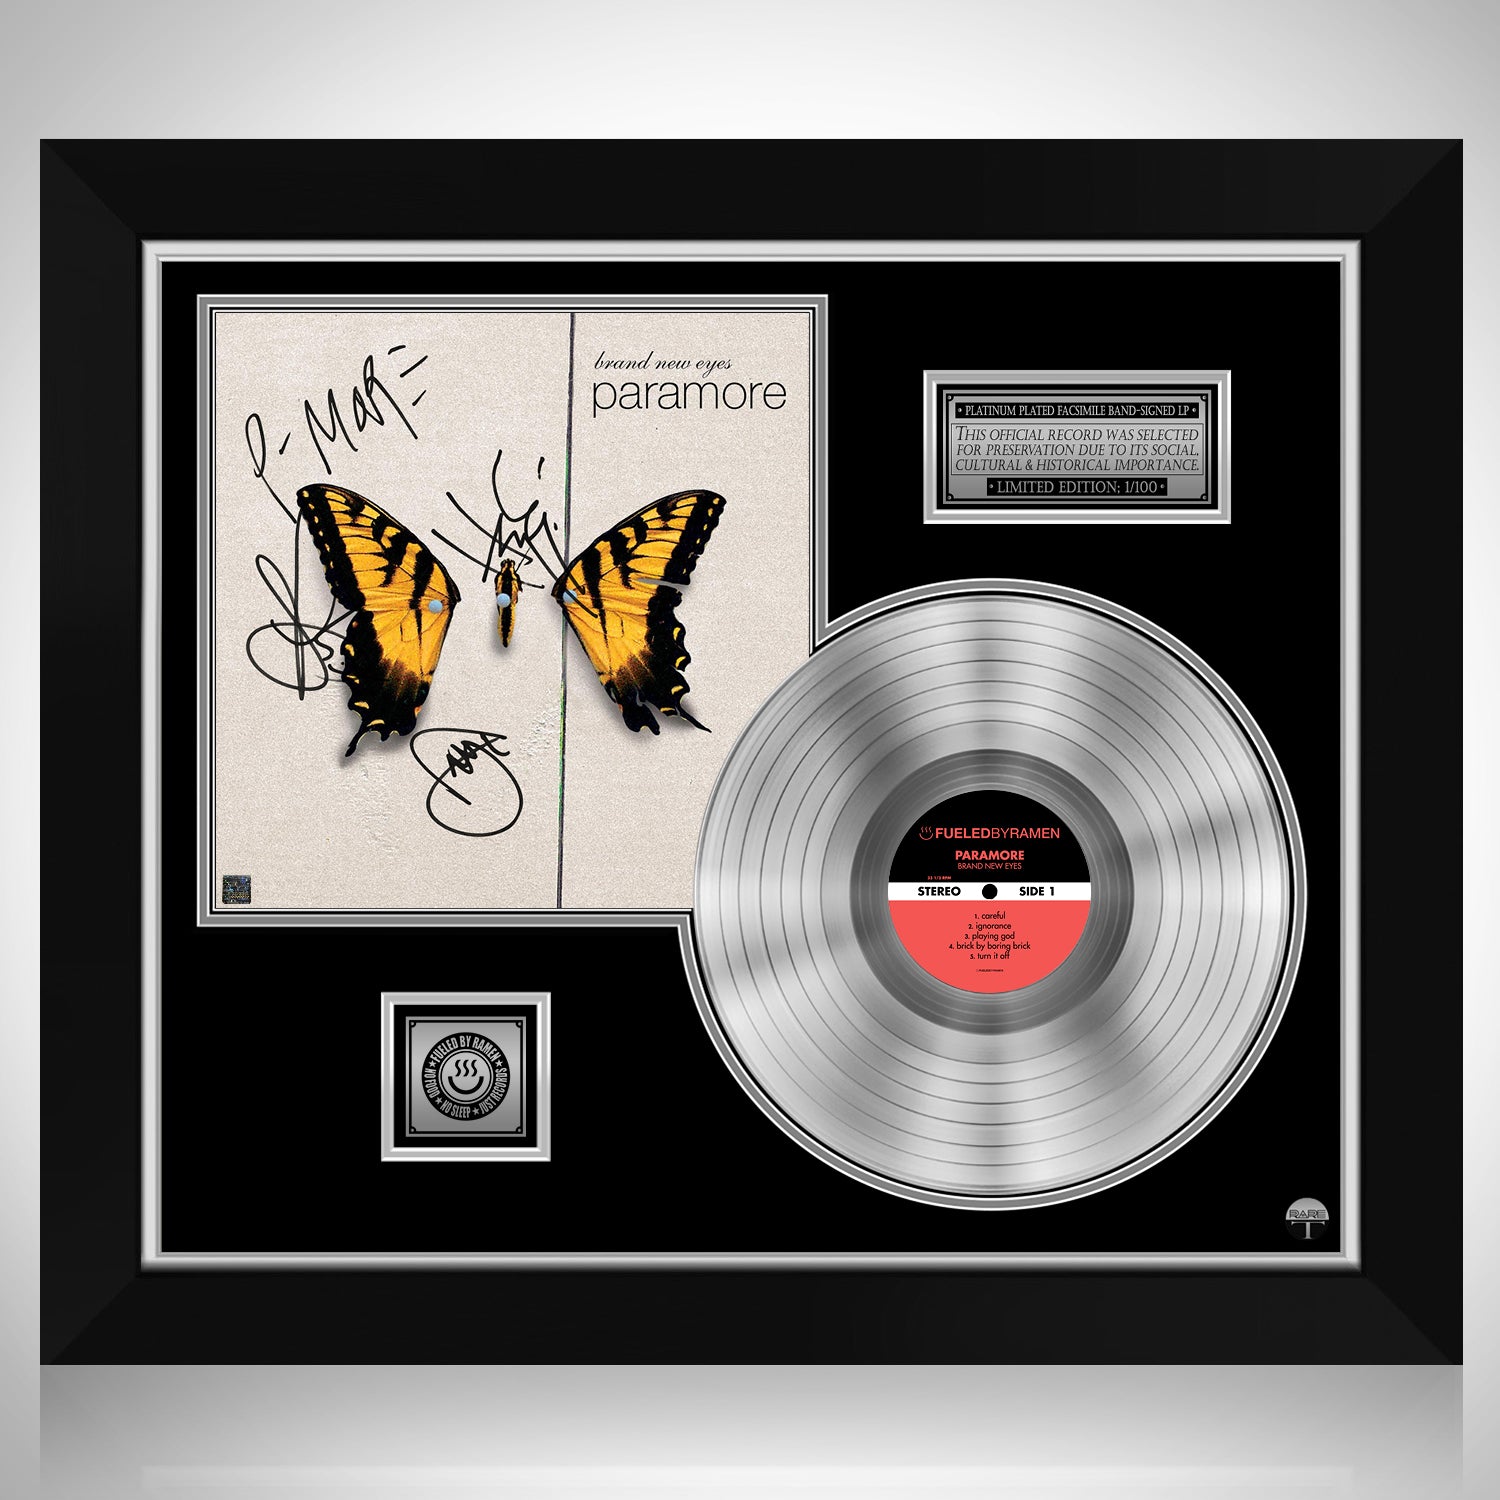 Paramore - Brand New Eyes Vinyl Record LP Album